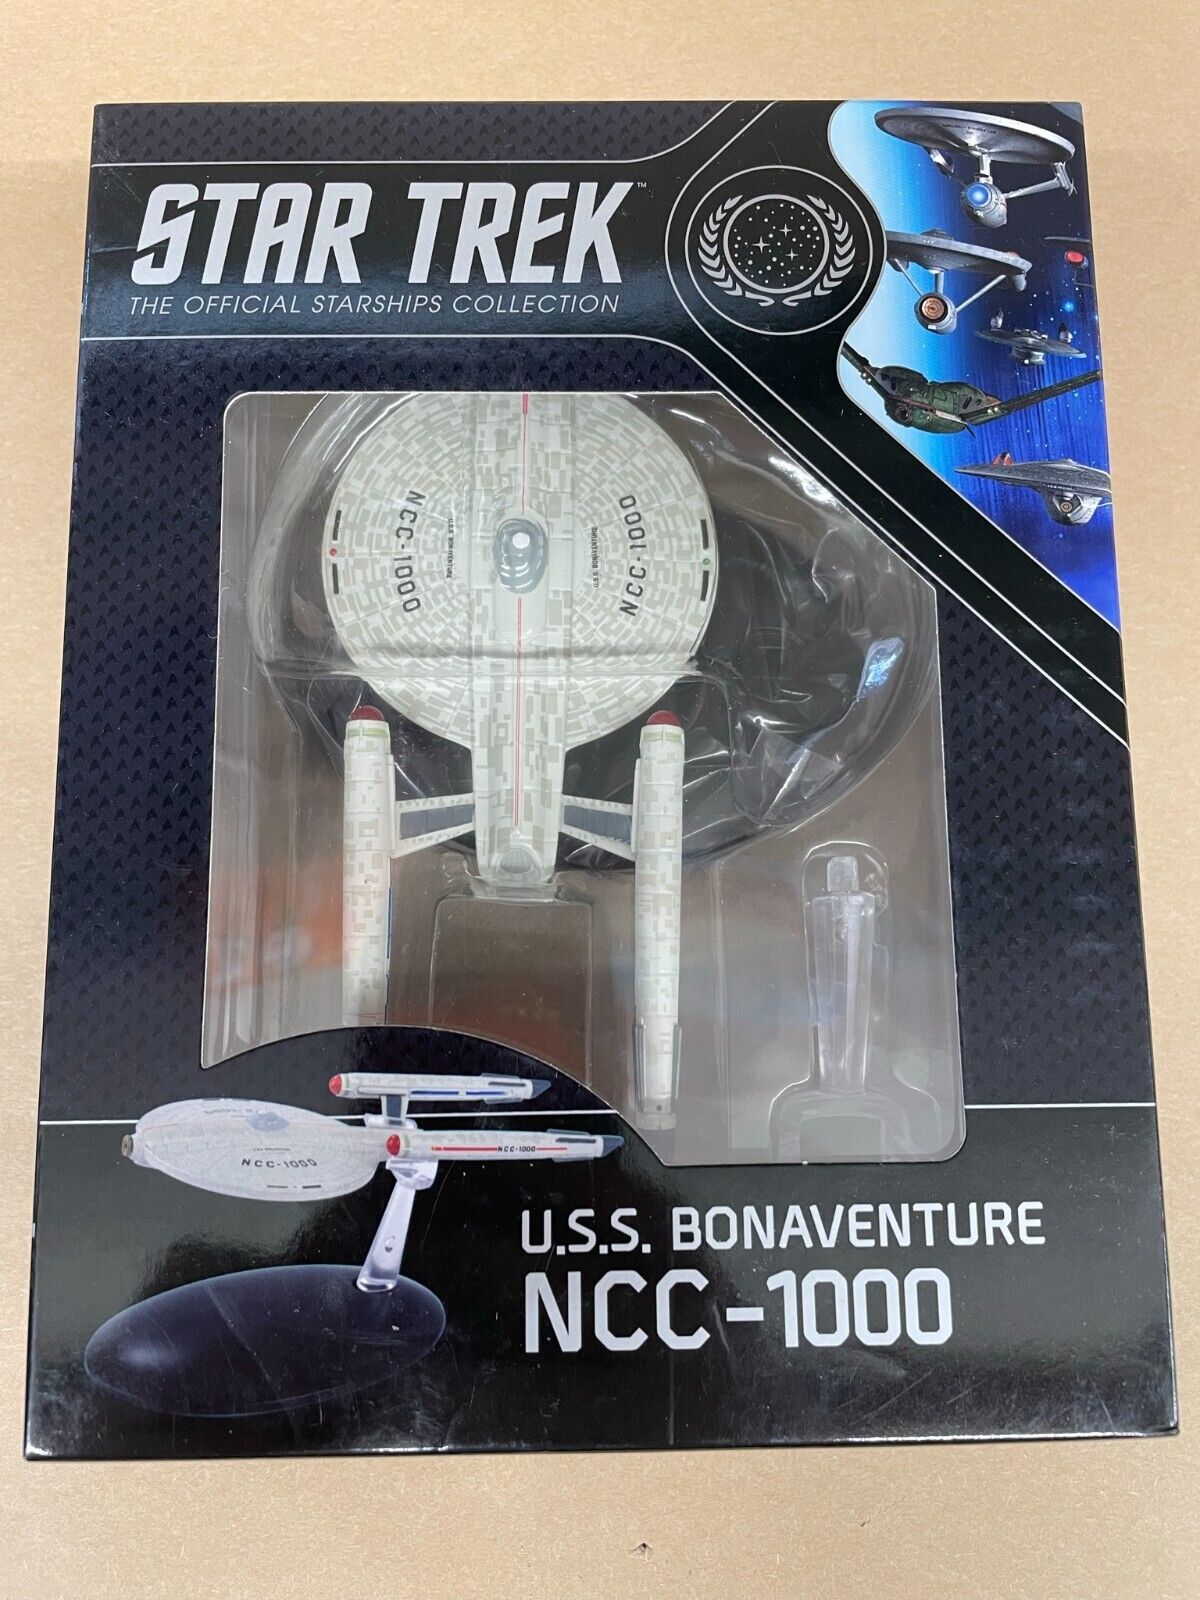 Star Trek Eaglemoss Official Starships Collection U.S.S. Bonaventure NCC-1000